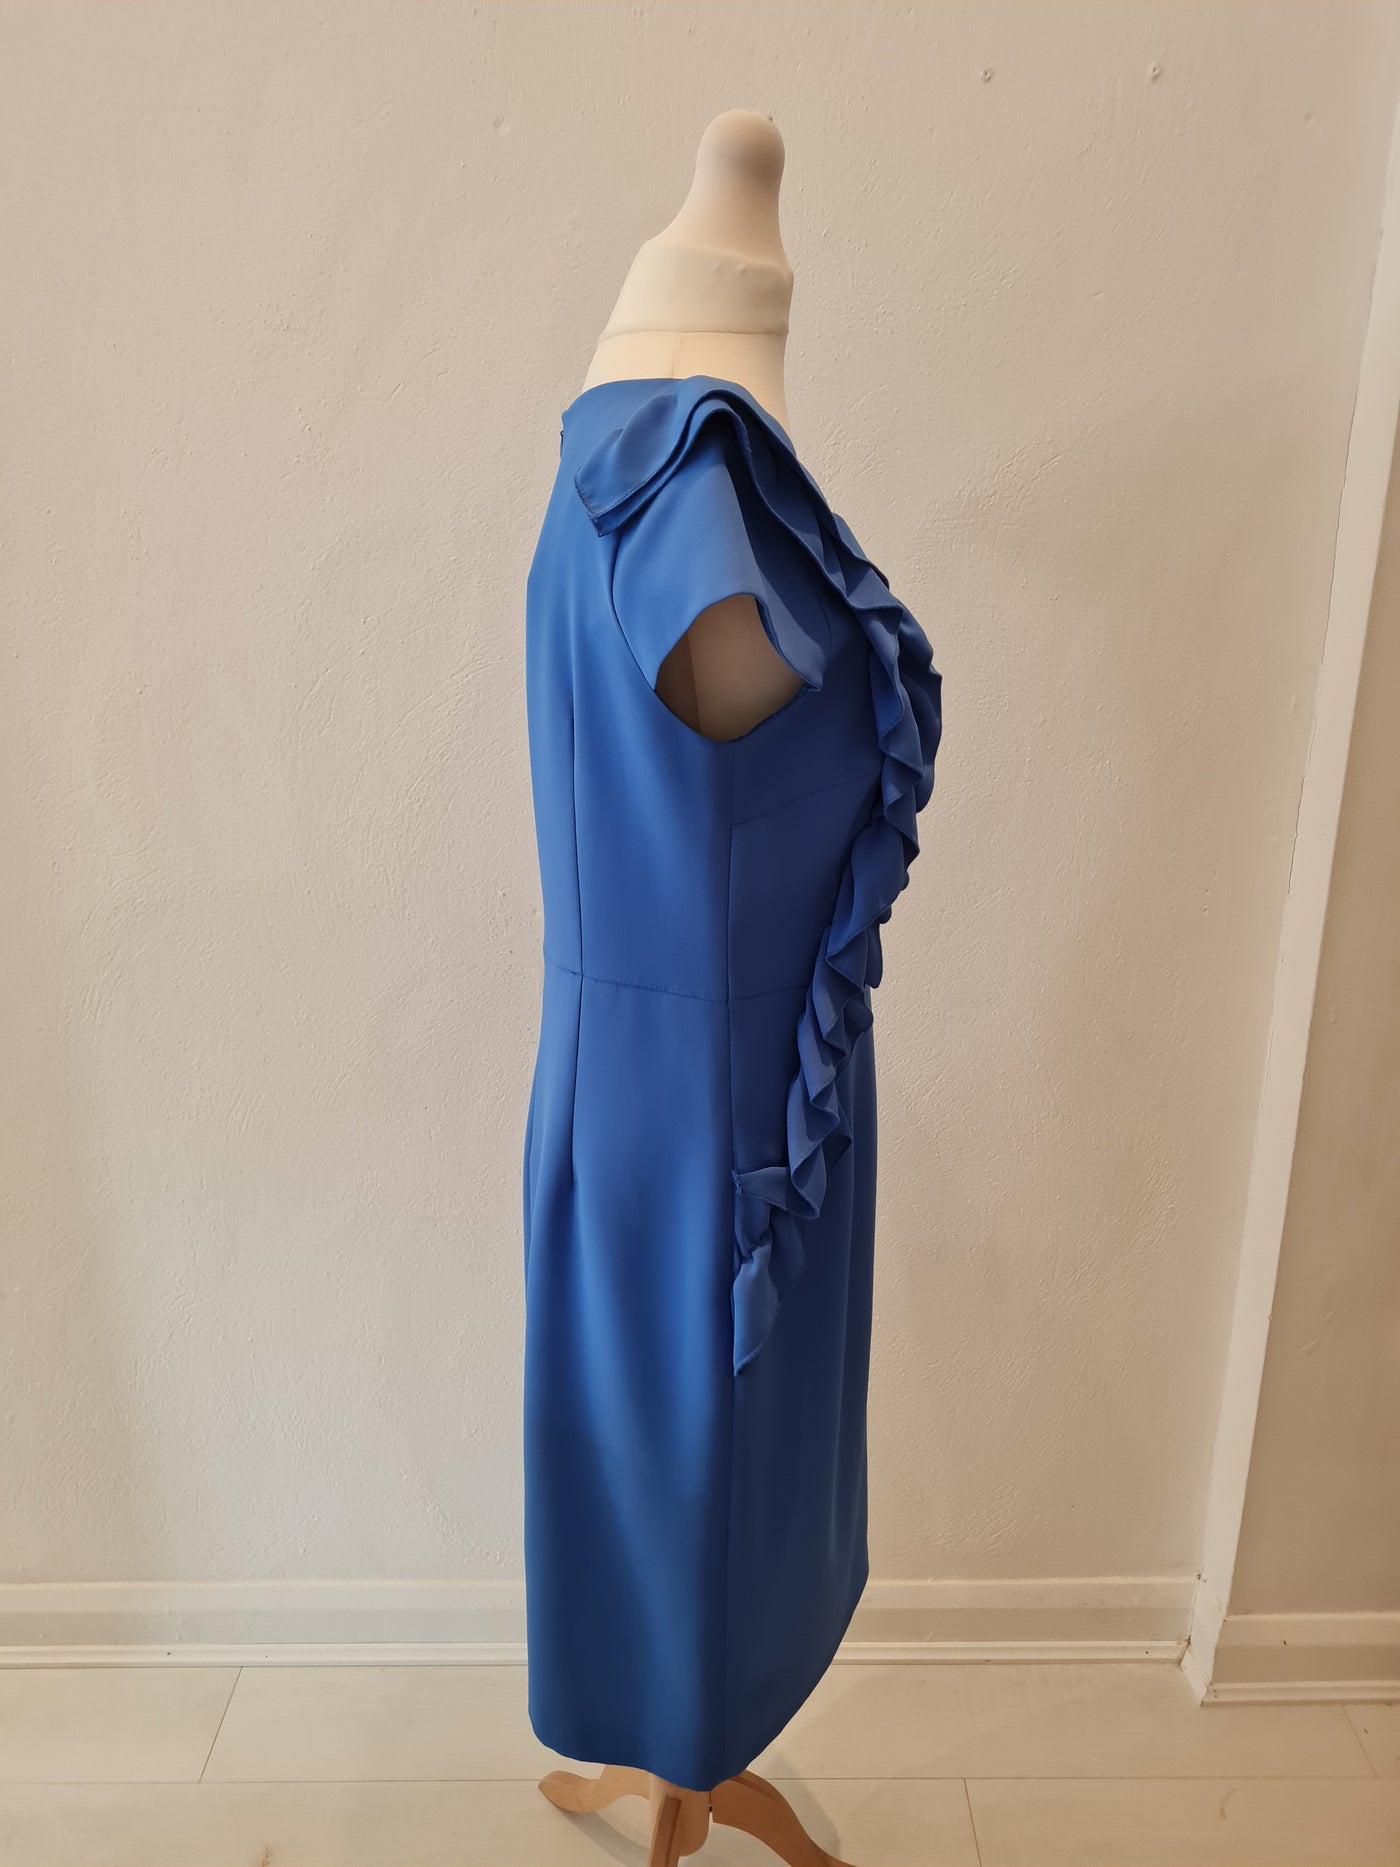 ELLA Bo Blue frill dress 12 RRP £135